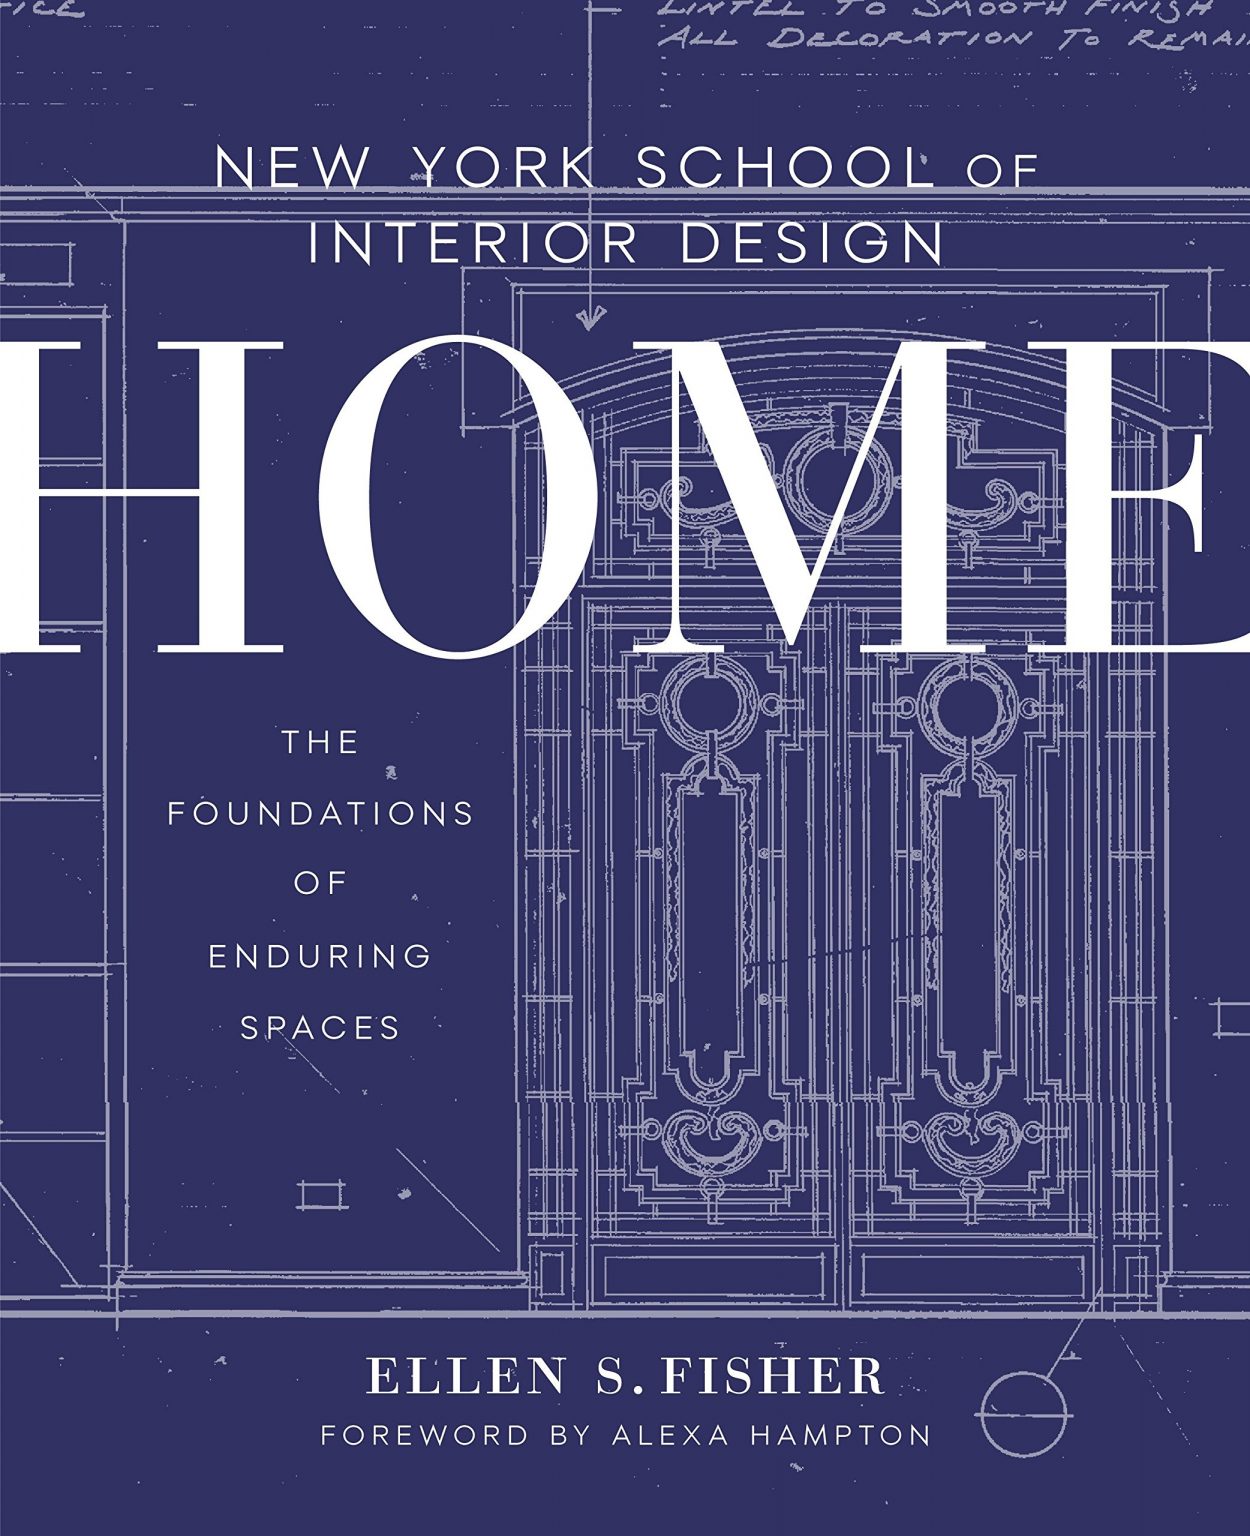 15 Best Interior Design Books for Interior Designers and Students Foyr